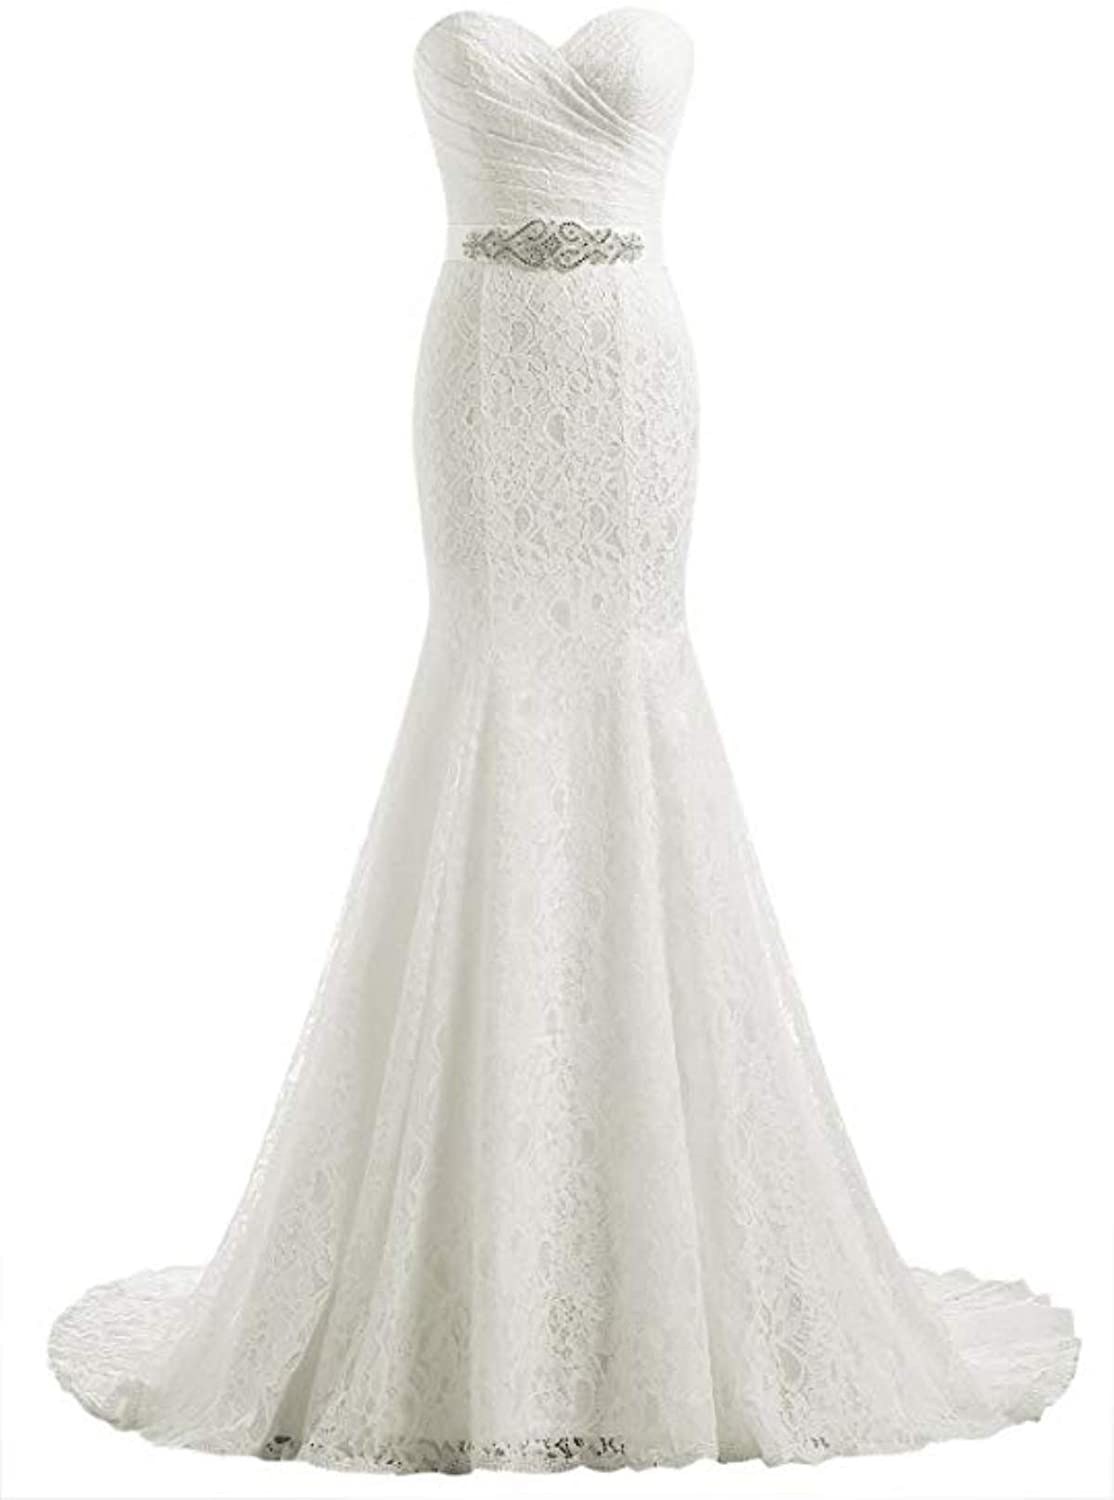 Likedpage Women's Lace Mermaid Bridal Wedding Dresses | eBay